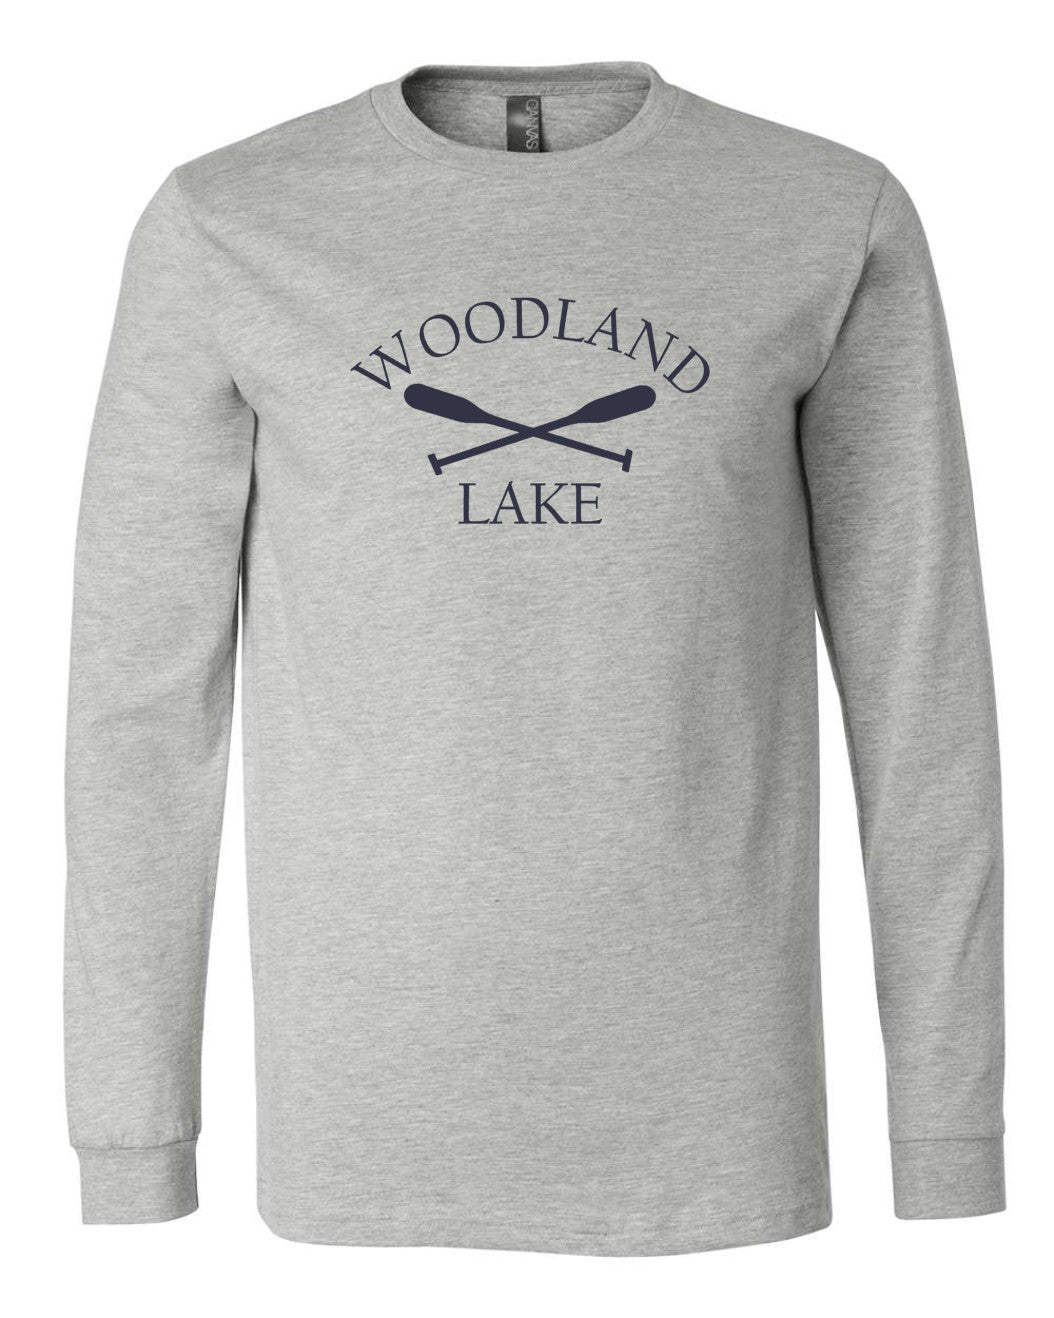 Woodland Lake "Oars" Premium L/S Tee